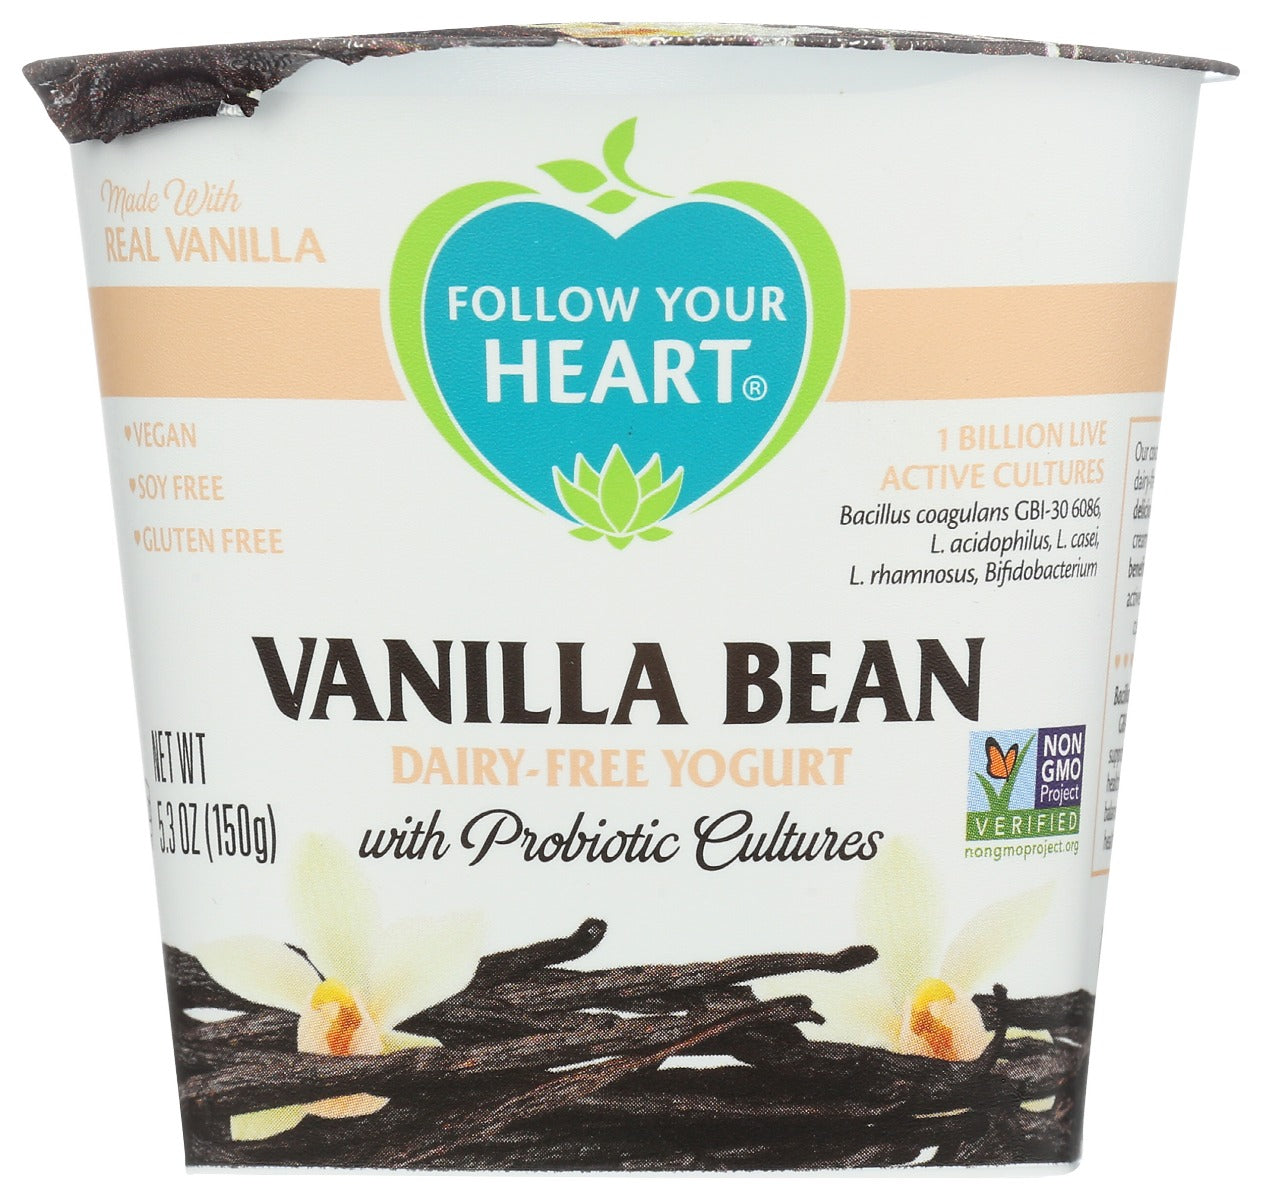 FOLLOW YOUR HEART: Vanilla Bean Dairy-Free Yogurt, 5.3 oz